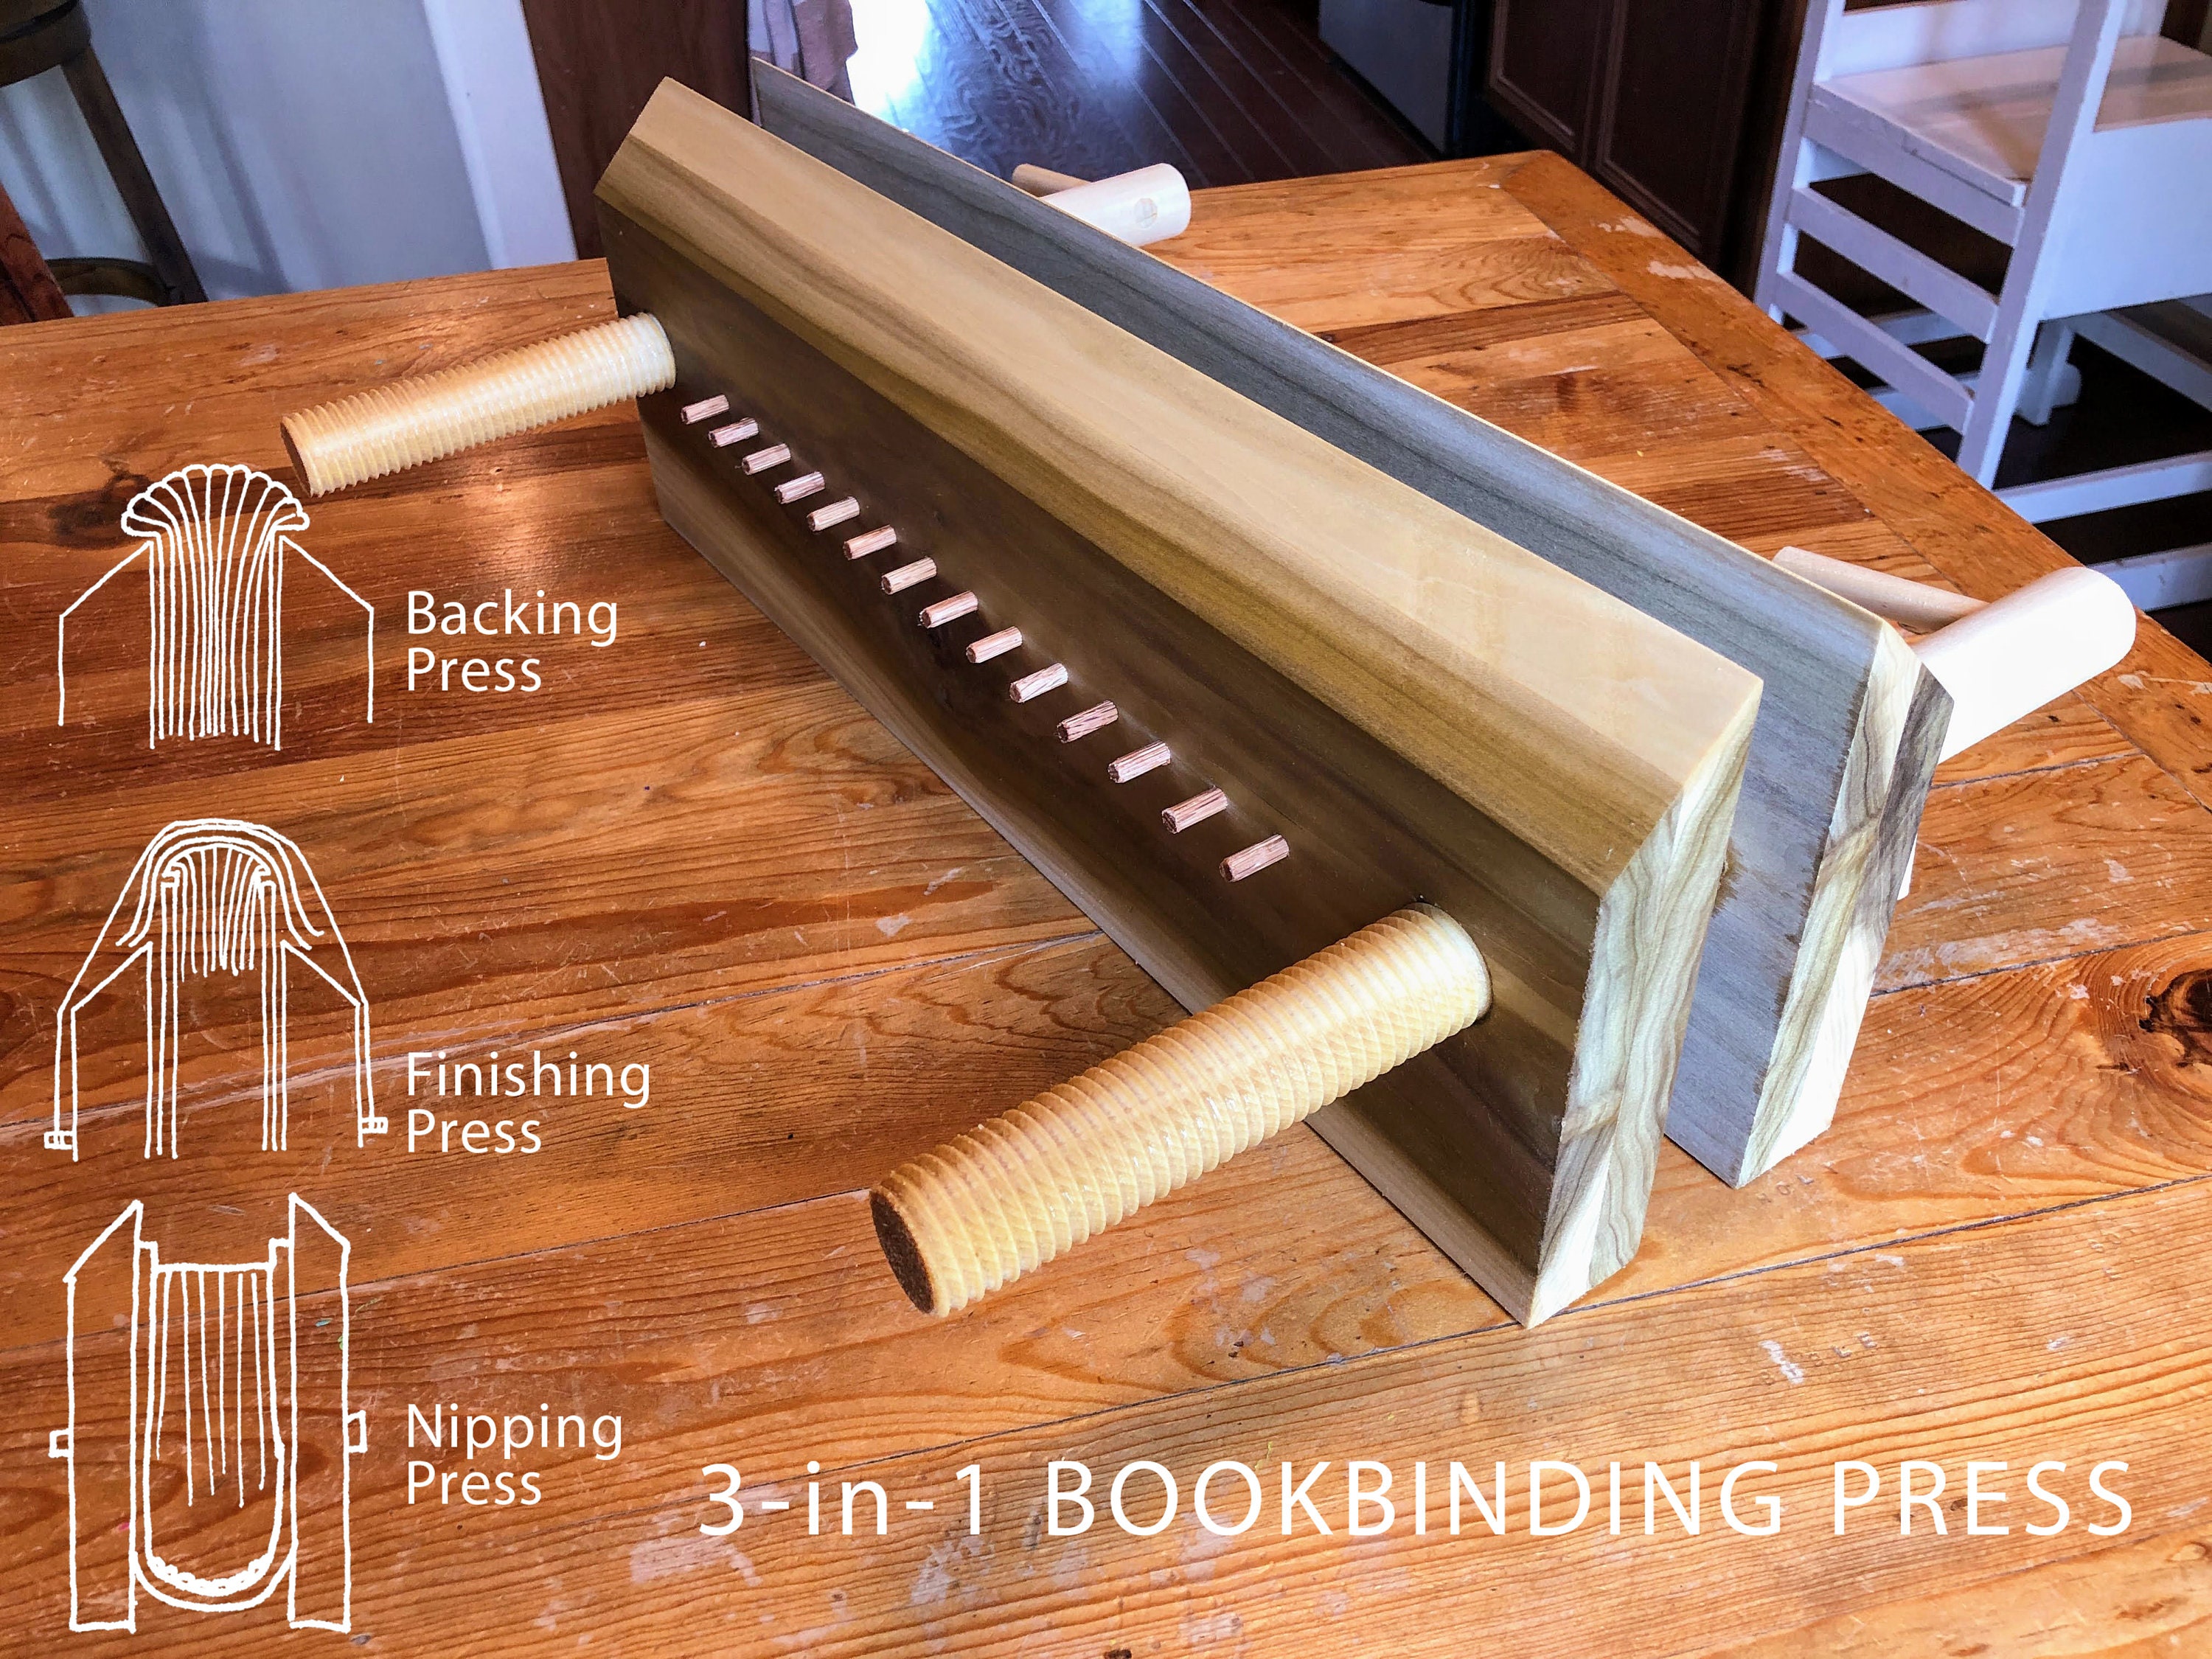 Bookbinding Press 3 in 1: Backing Press, Finishing Press, Nipping Press 2.0  New & Improved 